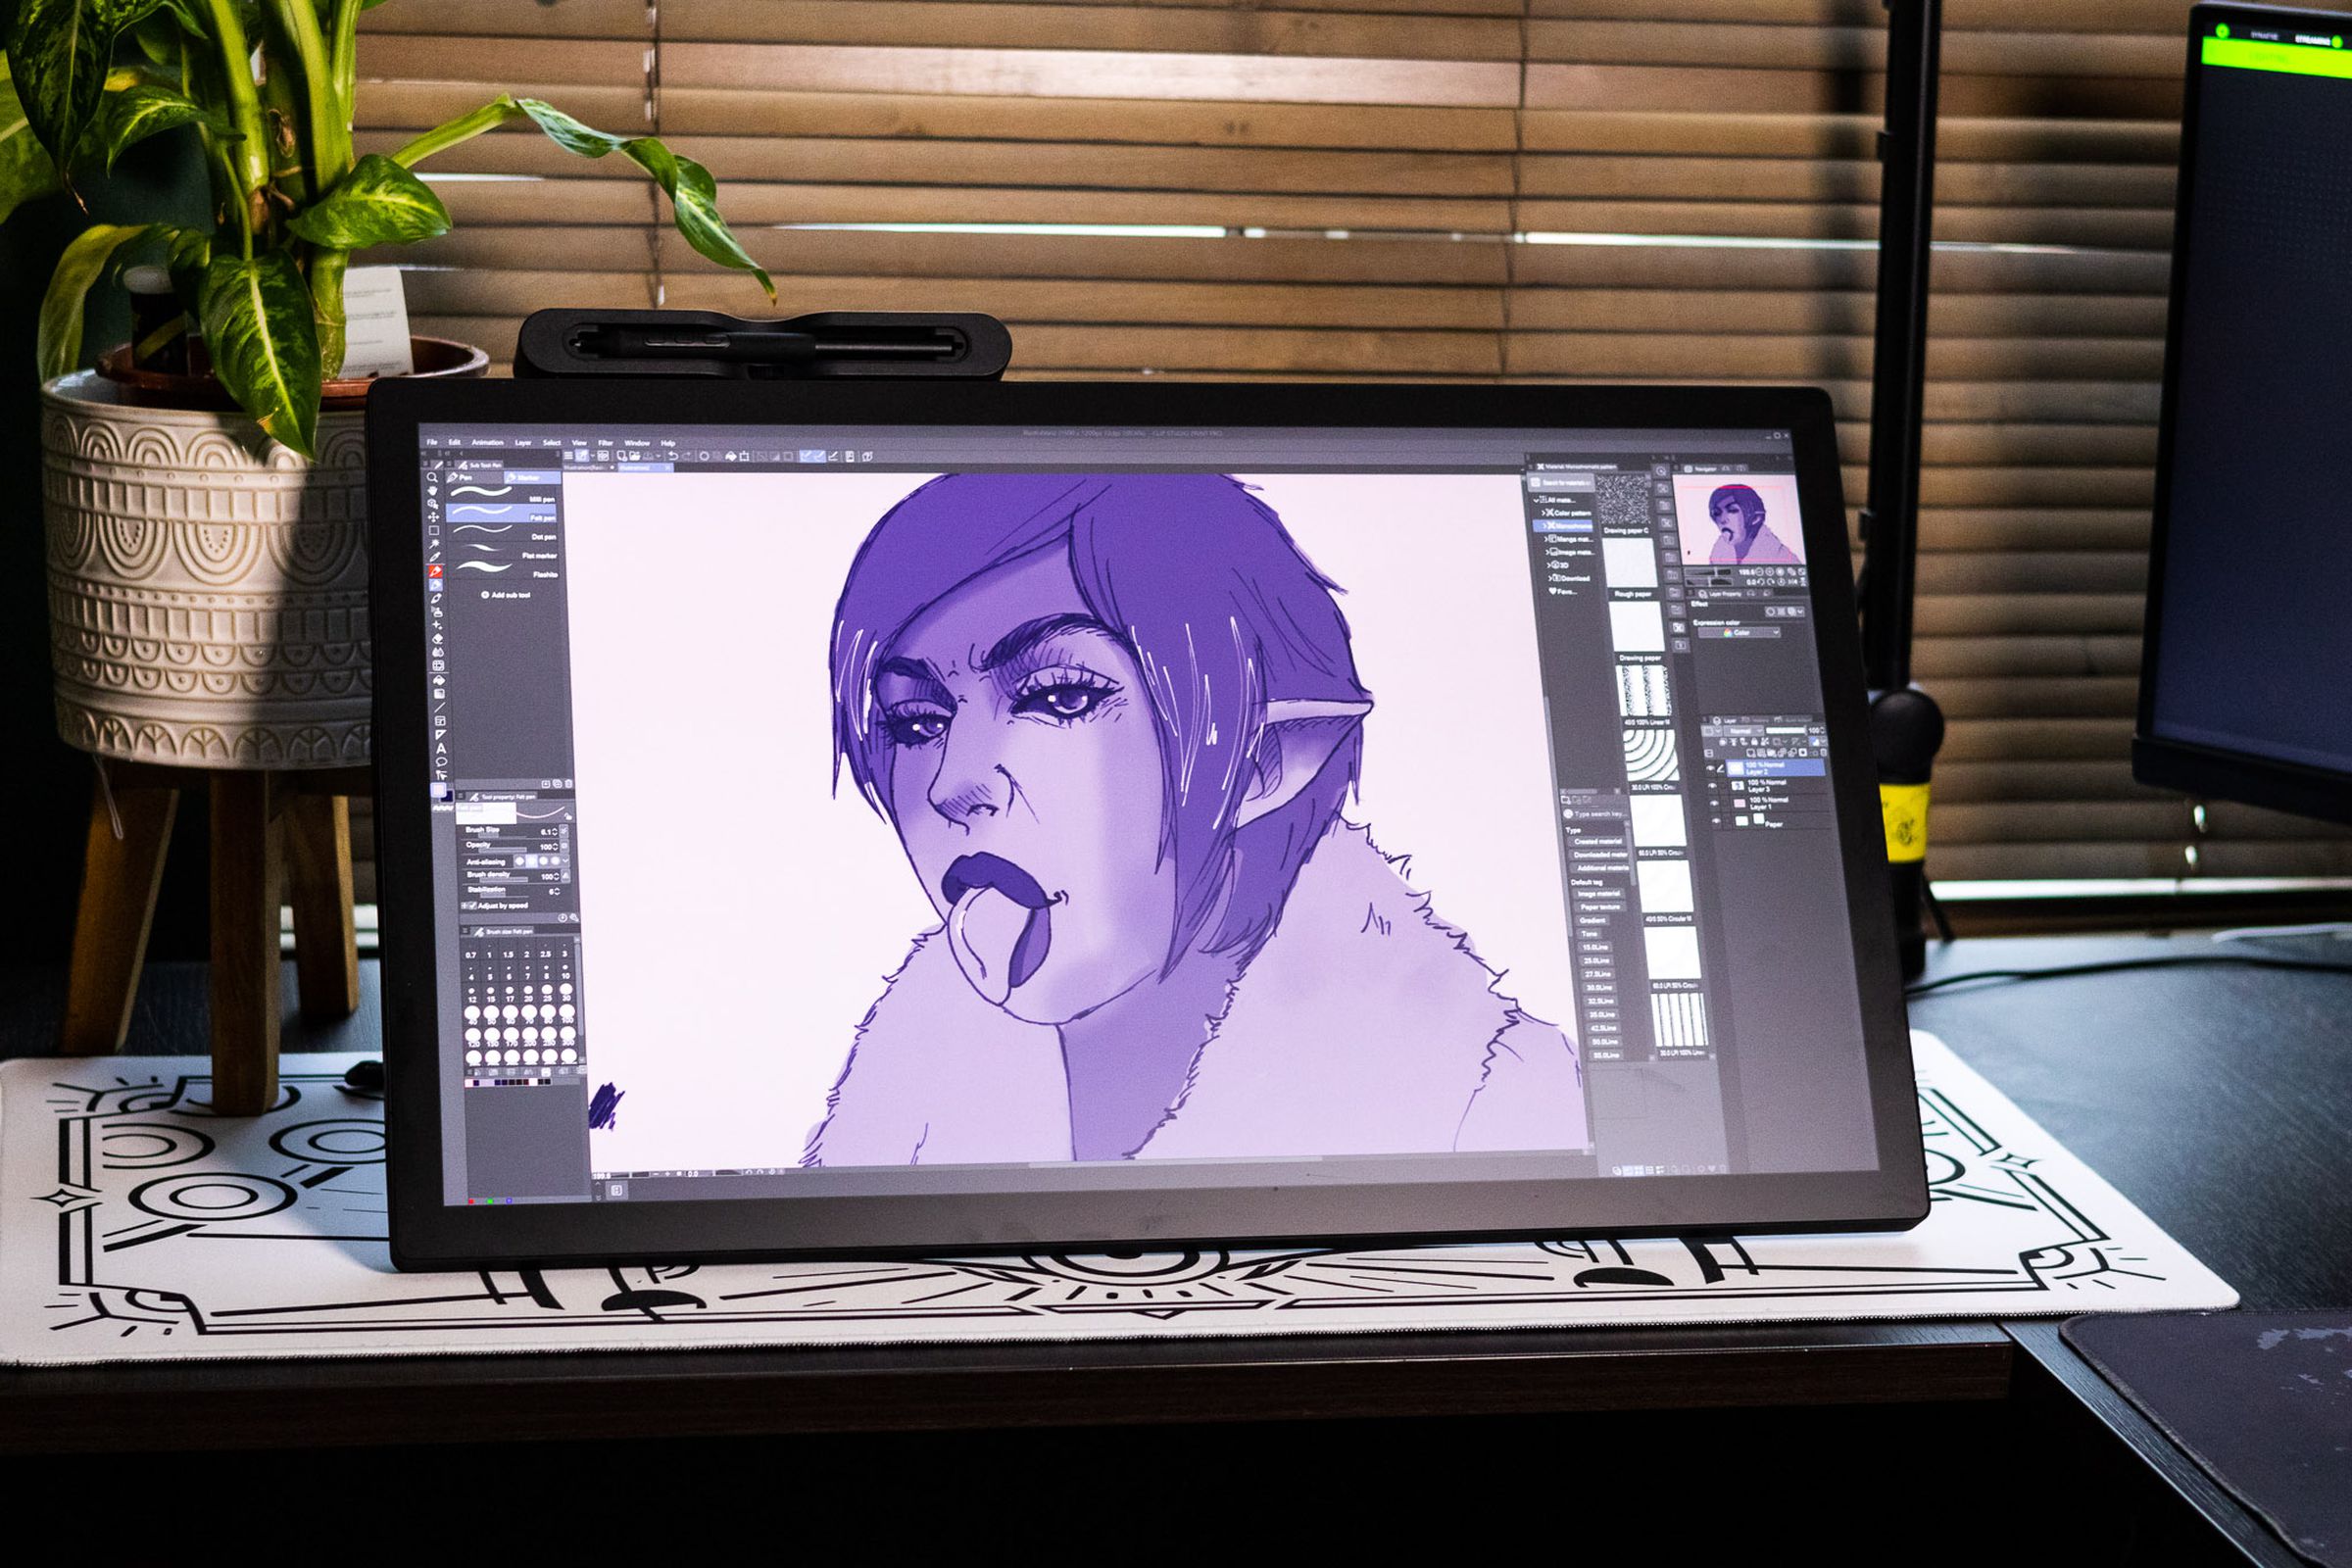 The Wacom Cintiq Pro 27 Creative Pen Display on a desk, displaying a purple illustration.